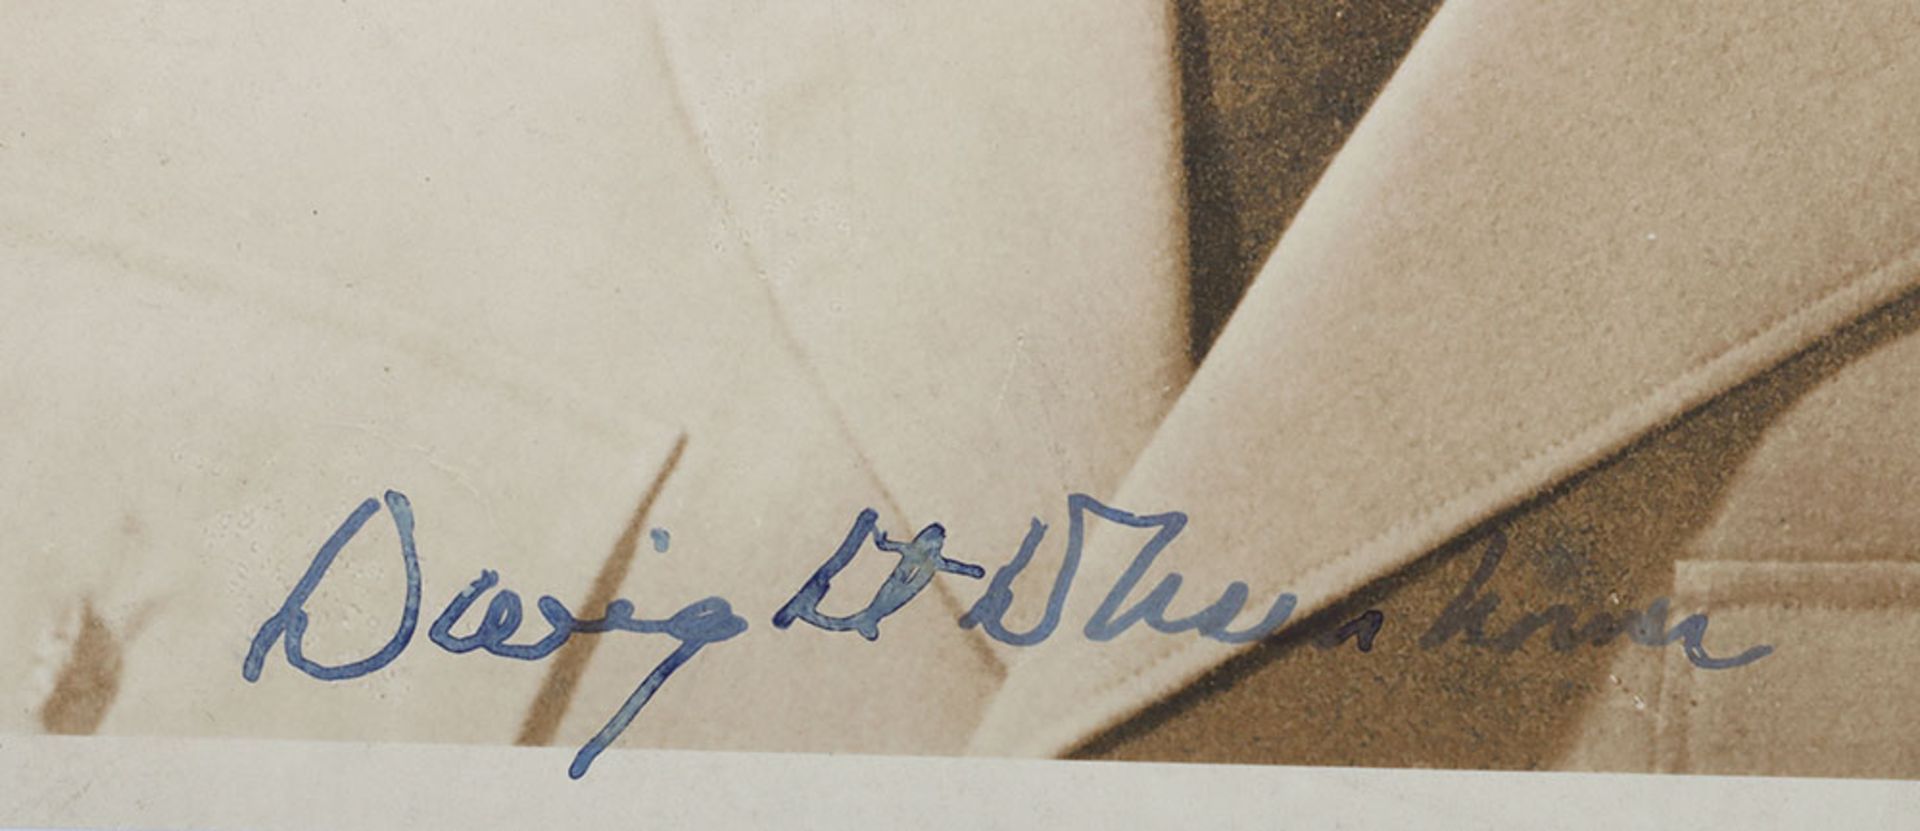 Dwight Eisenhower Signed photograph - Image 2 of 4